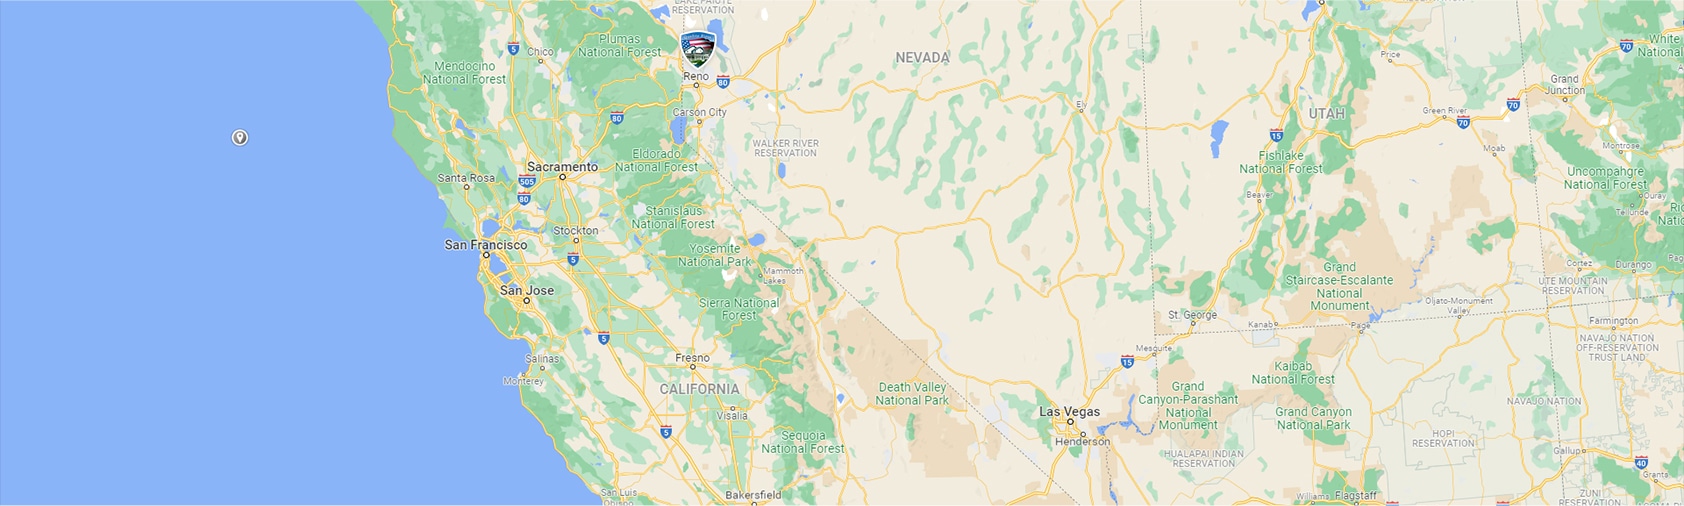 nevada location map